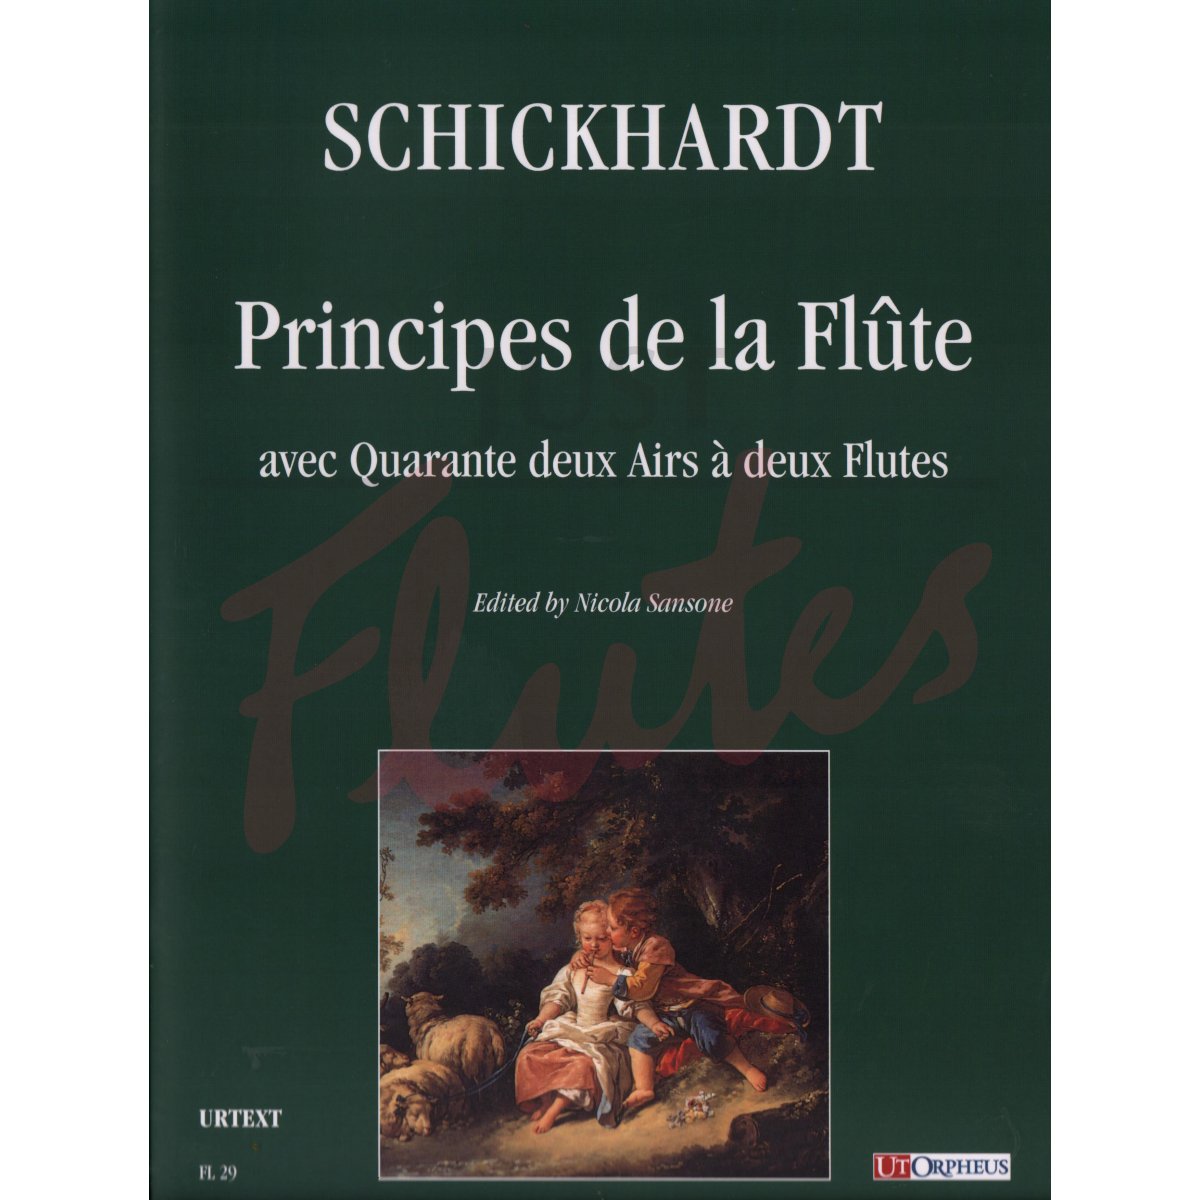 Principes de la Flute for Two Flutes